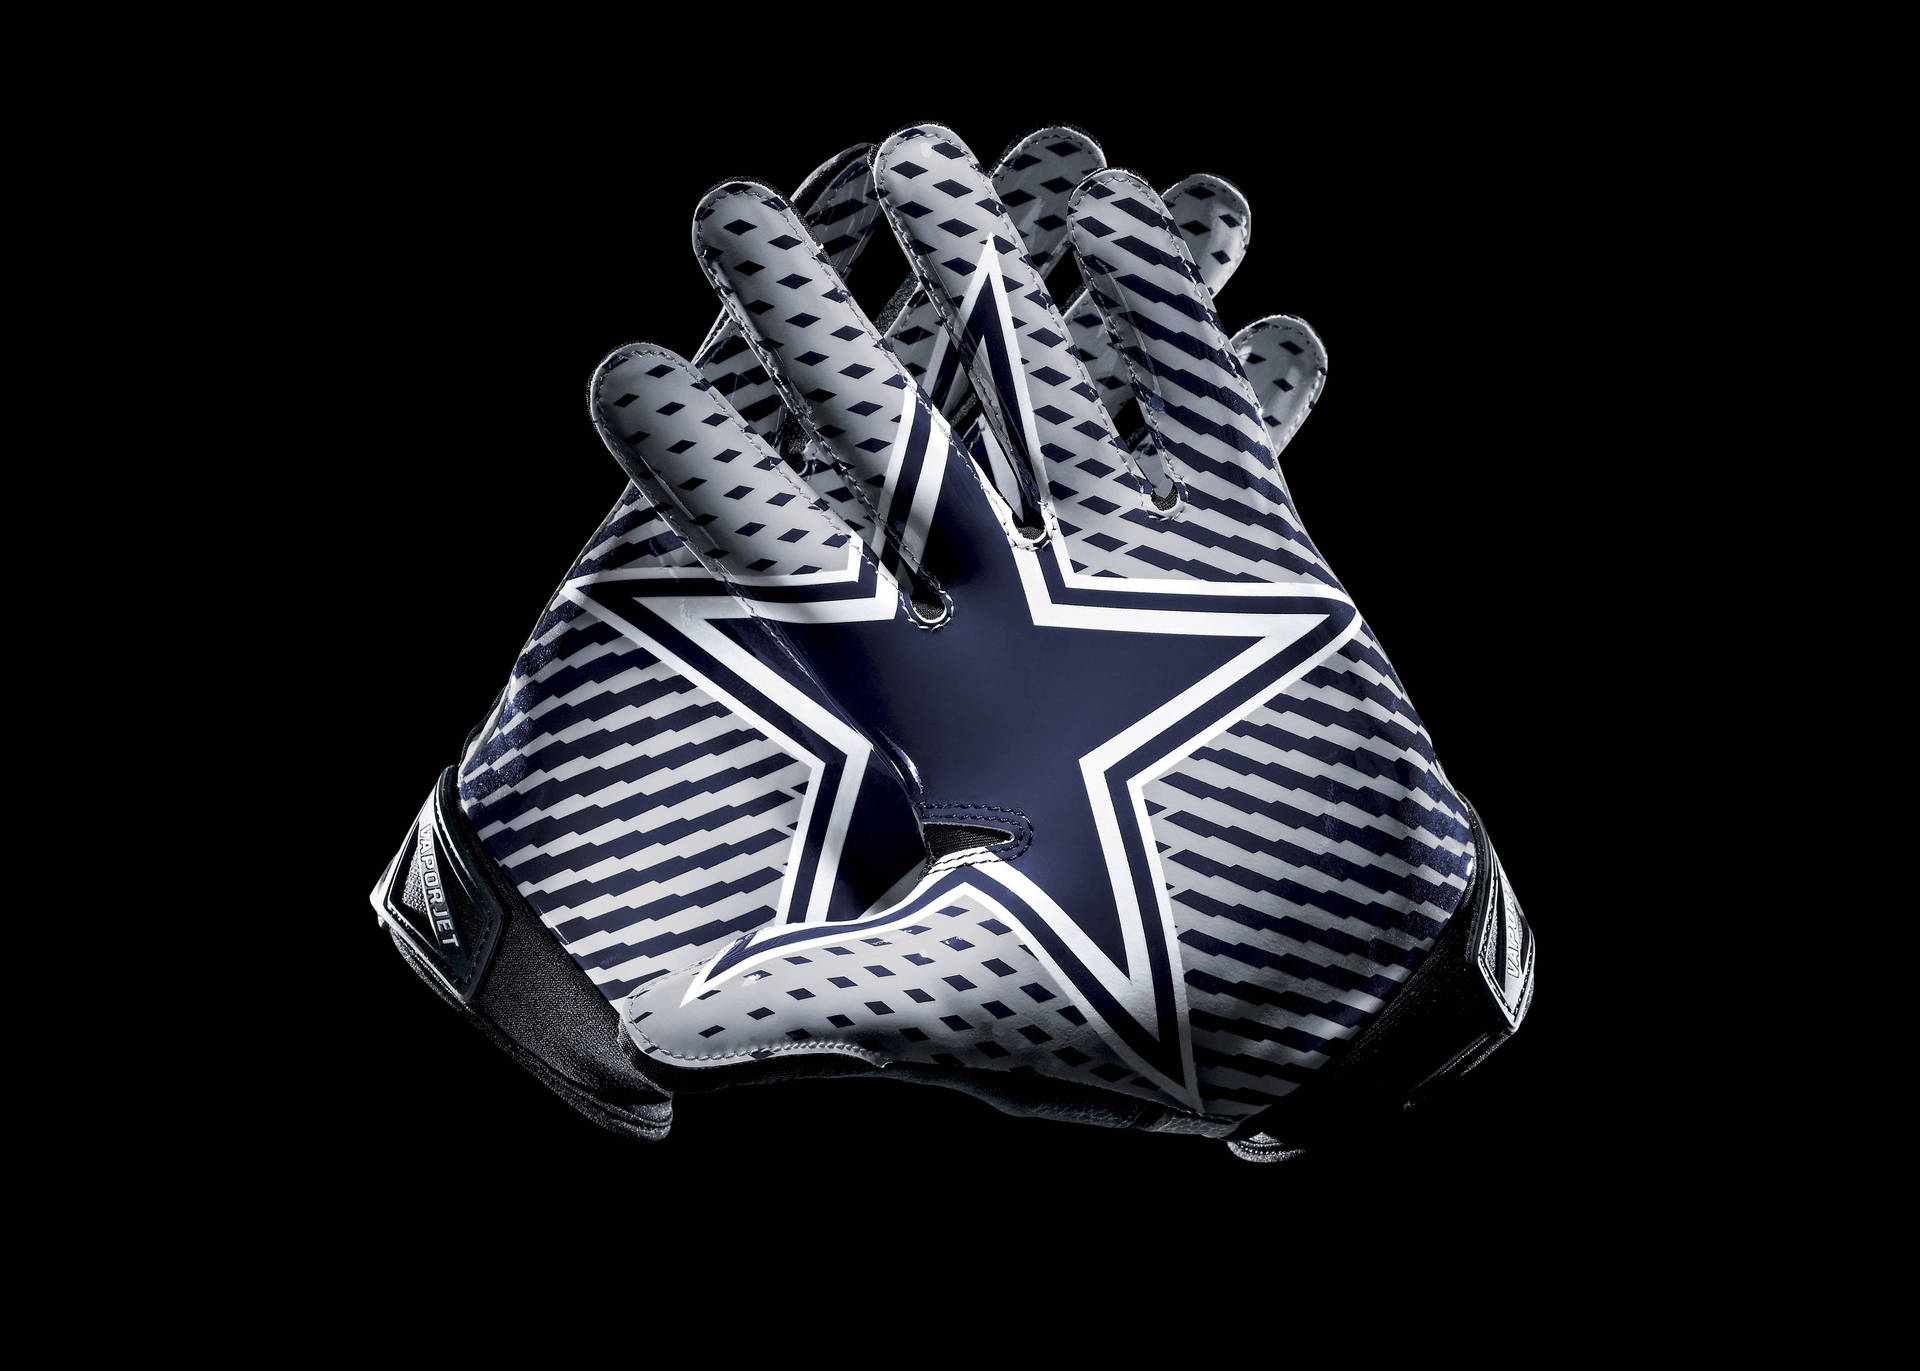 Dallas Cowboys Gloves Wallpaper Background